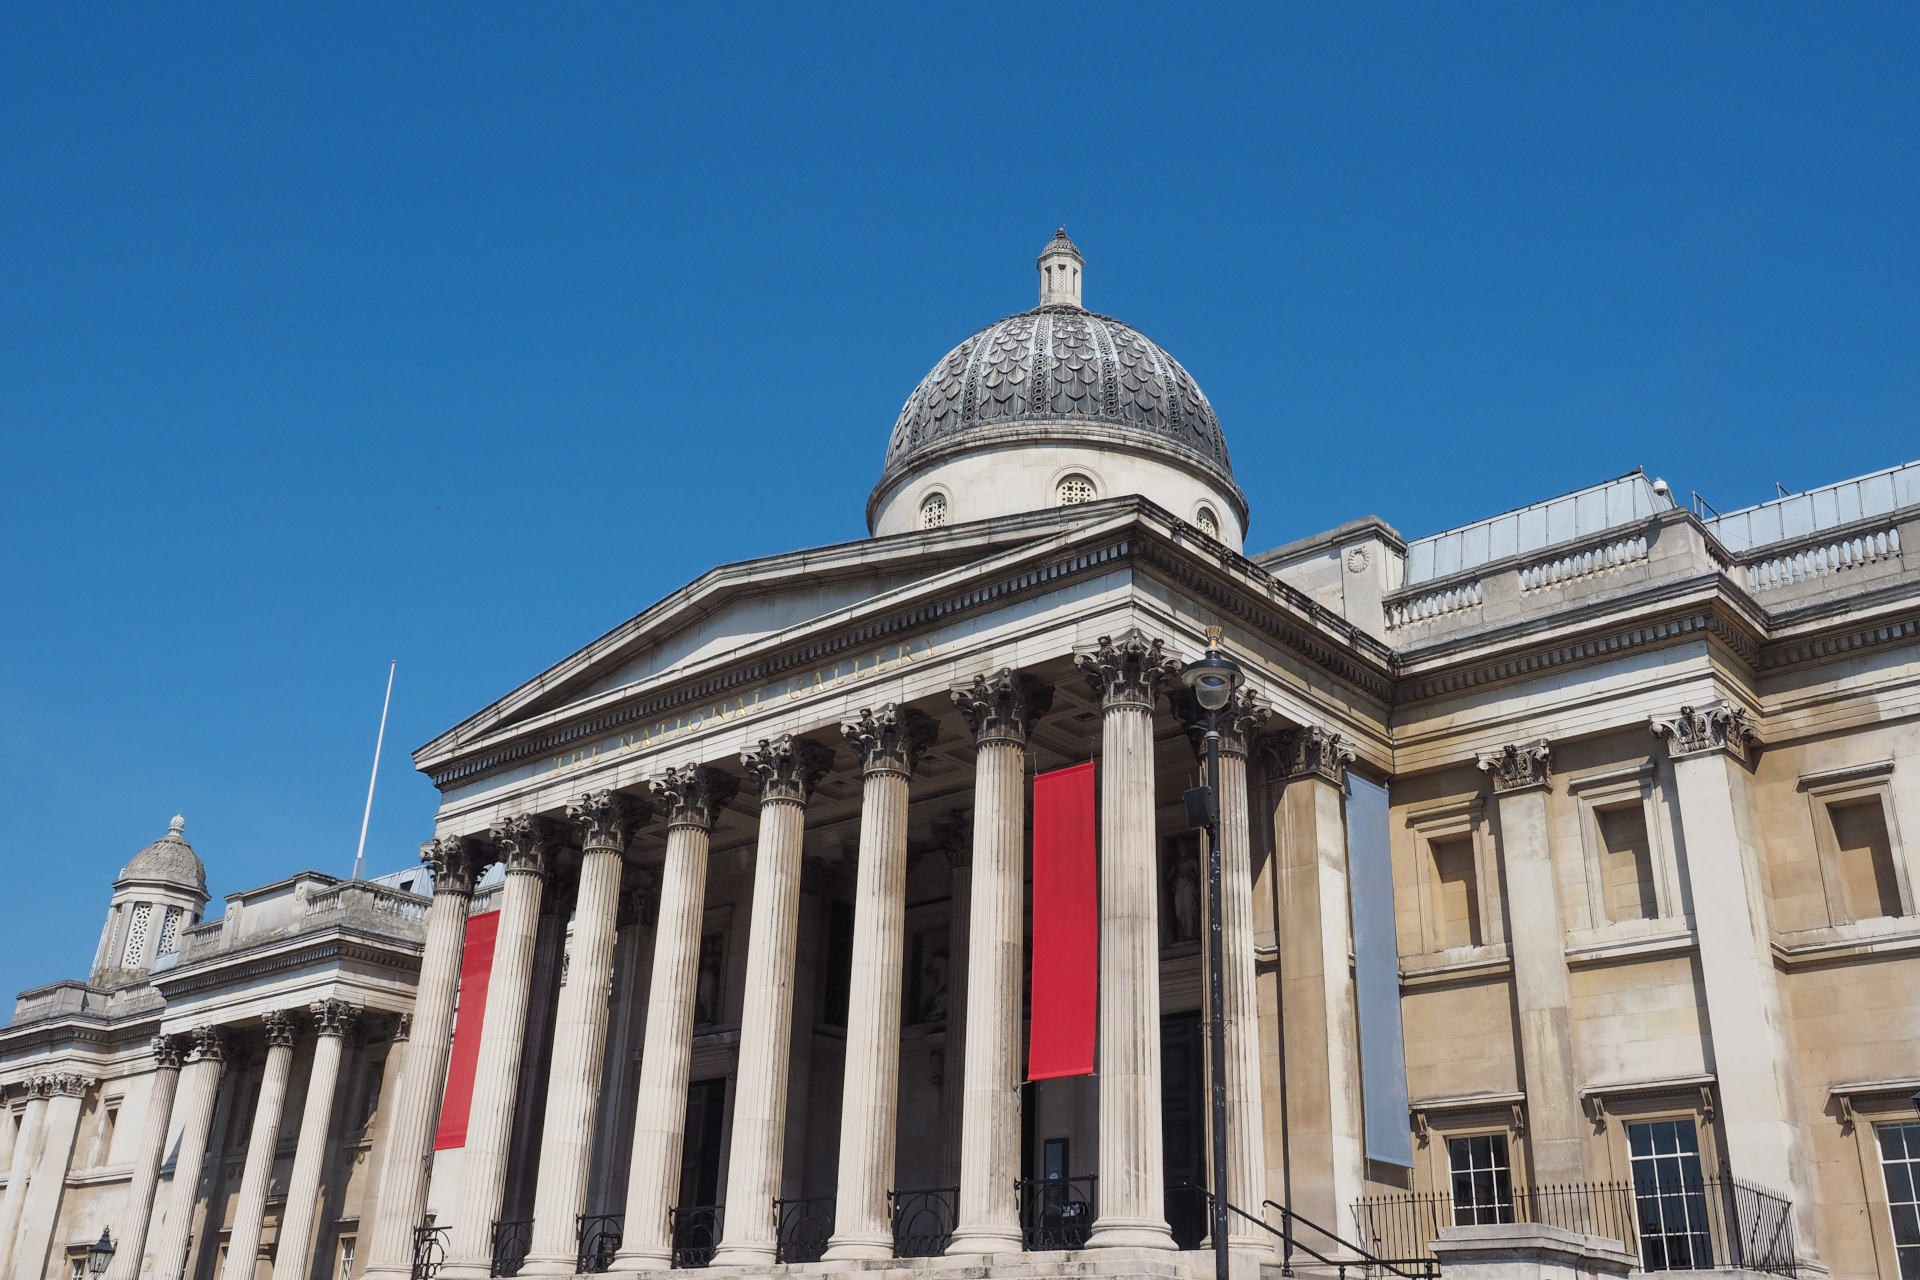 The National Gallery in Trafalgar Square in London, UK